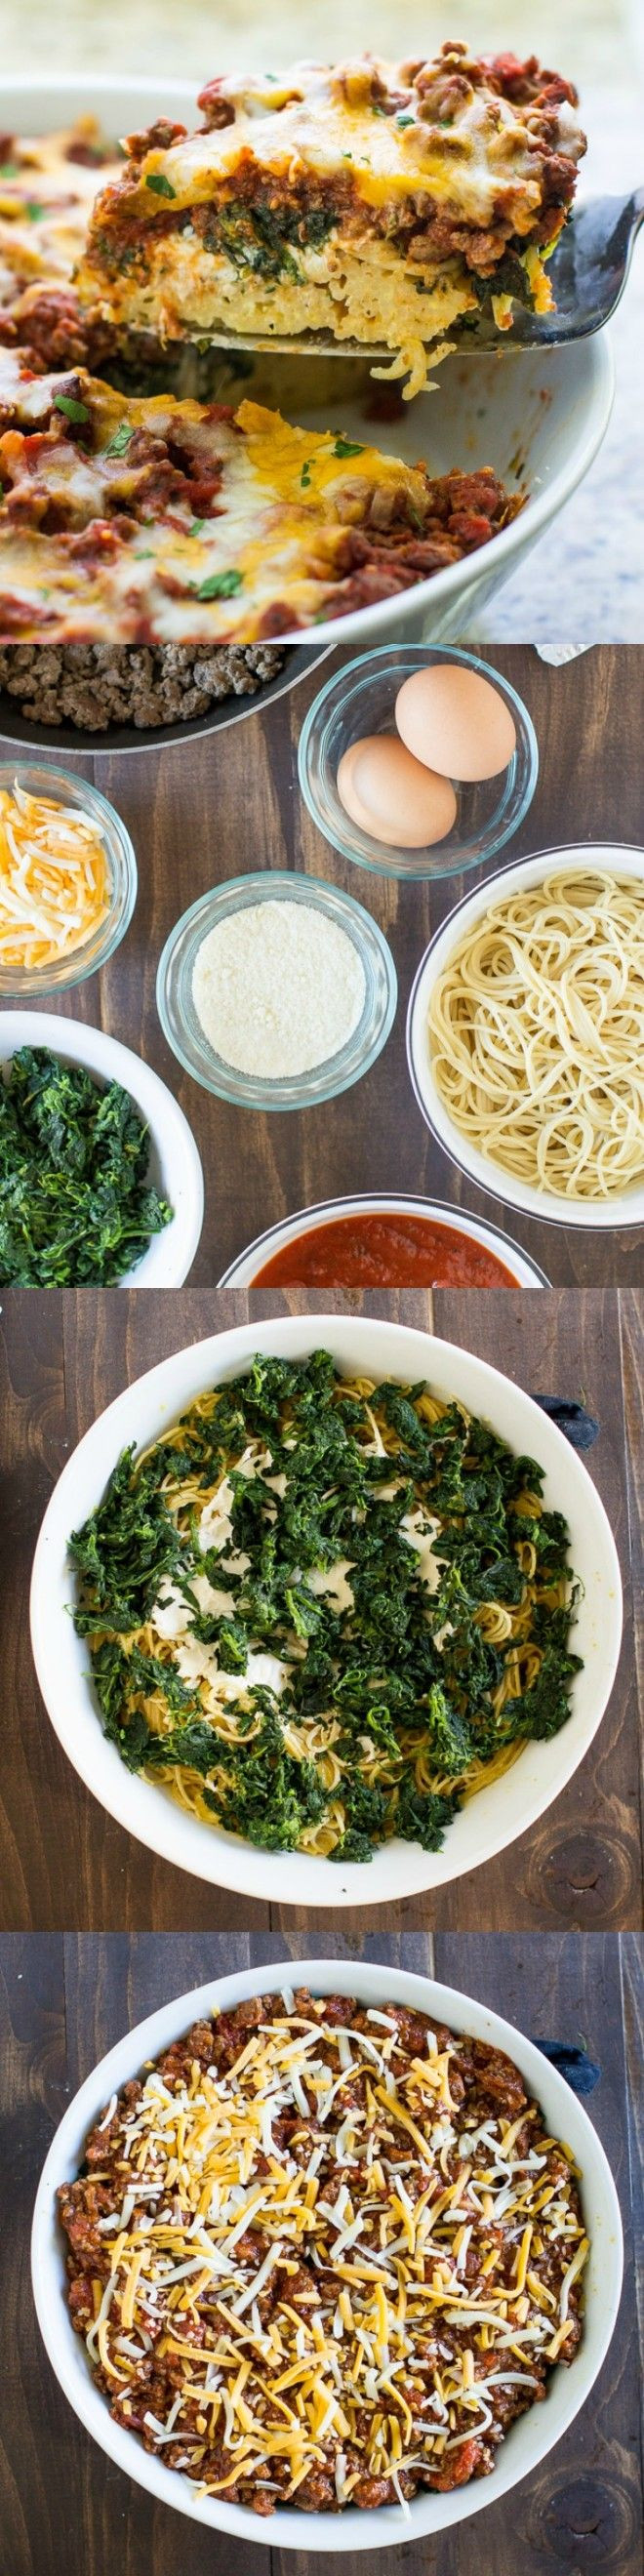 Spaghetti Dinner Party Ideas
 25 best ideas about Spaghetti dinner on Pinterest